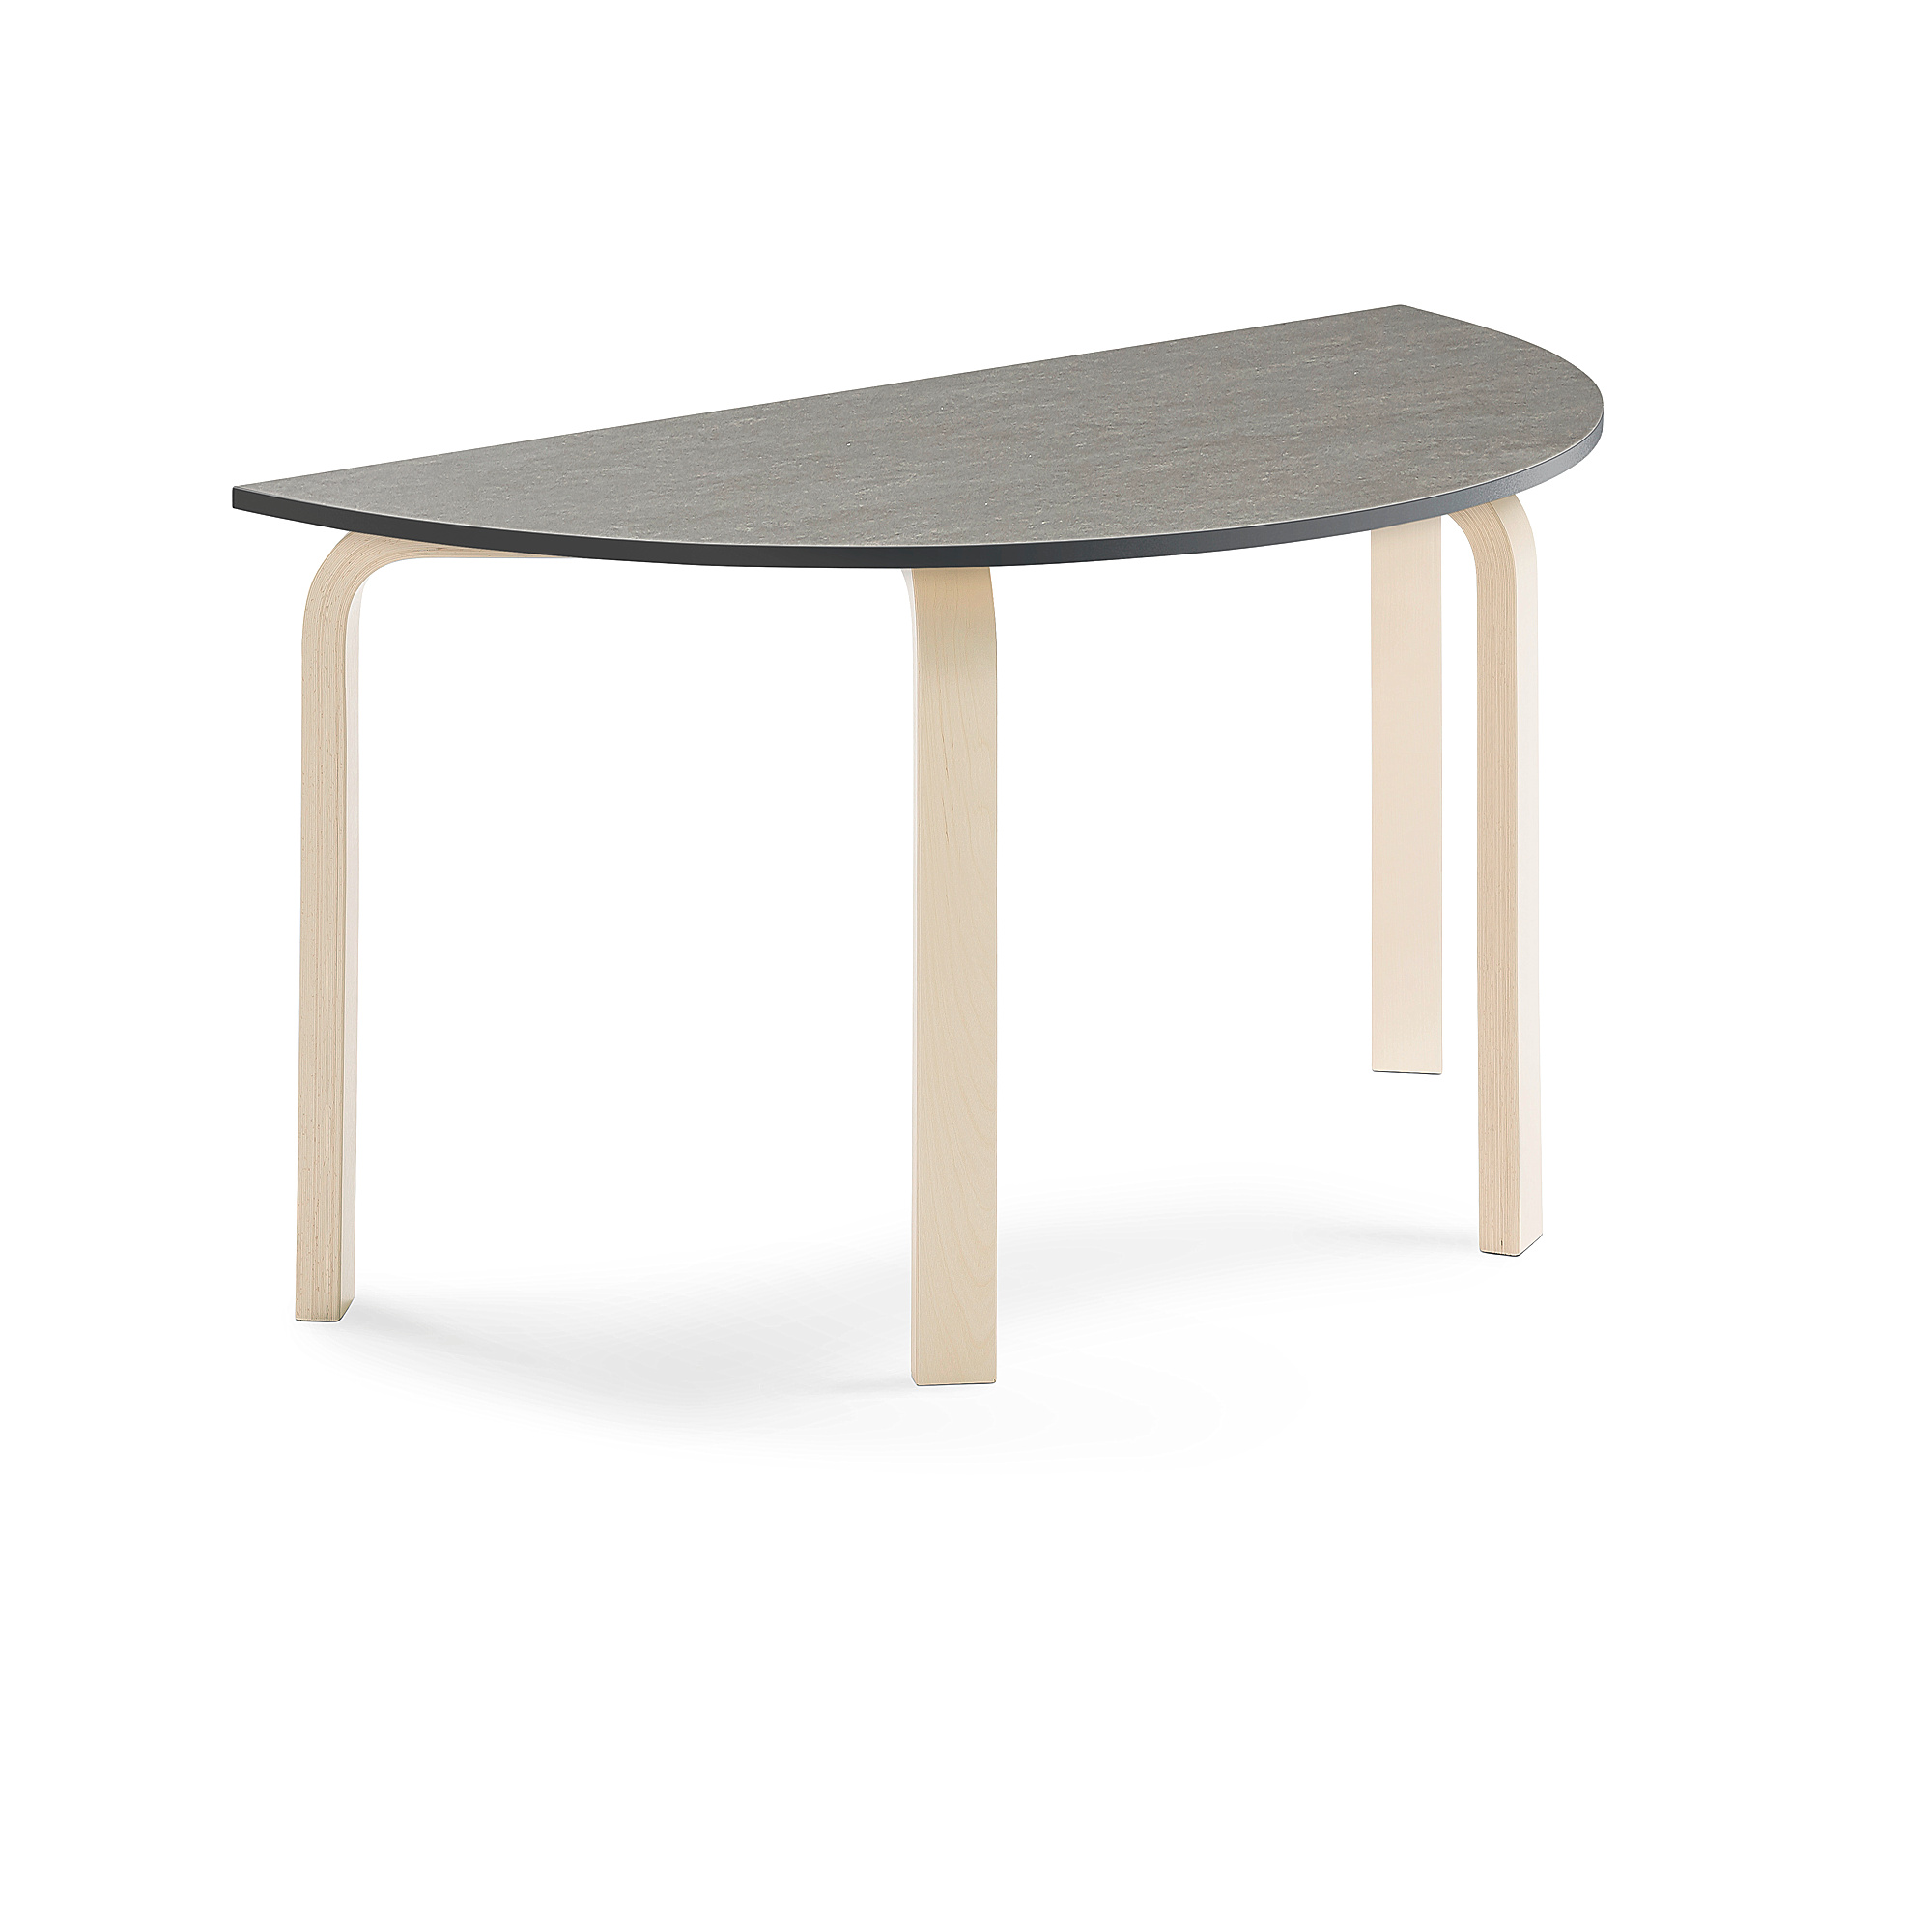 Stůl ELTON, půlkruh, 1200x600x640 mm, bříza, akustické linoleum, tmavě šedá